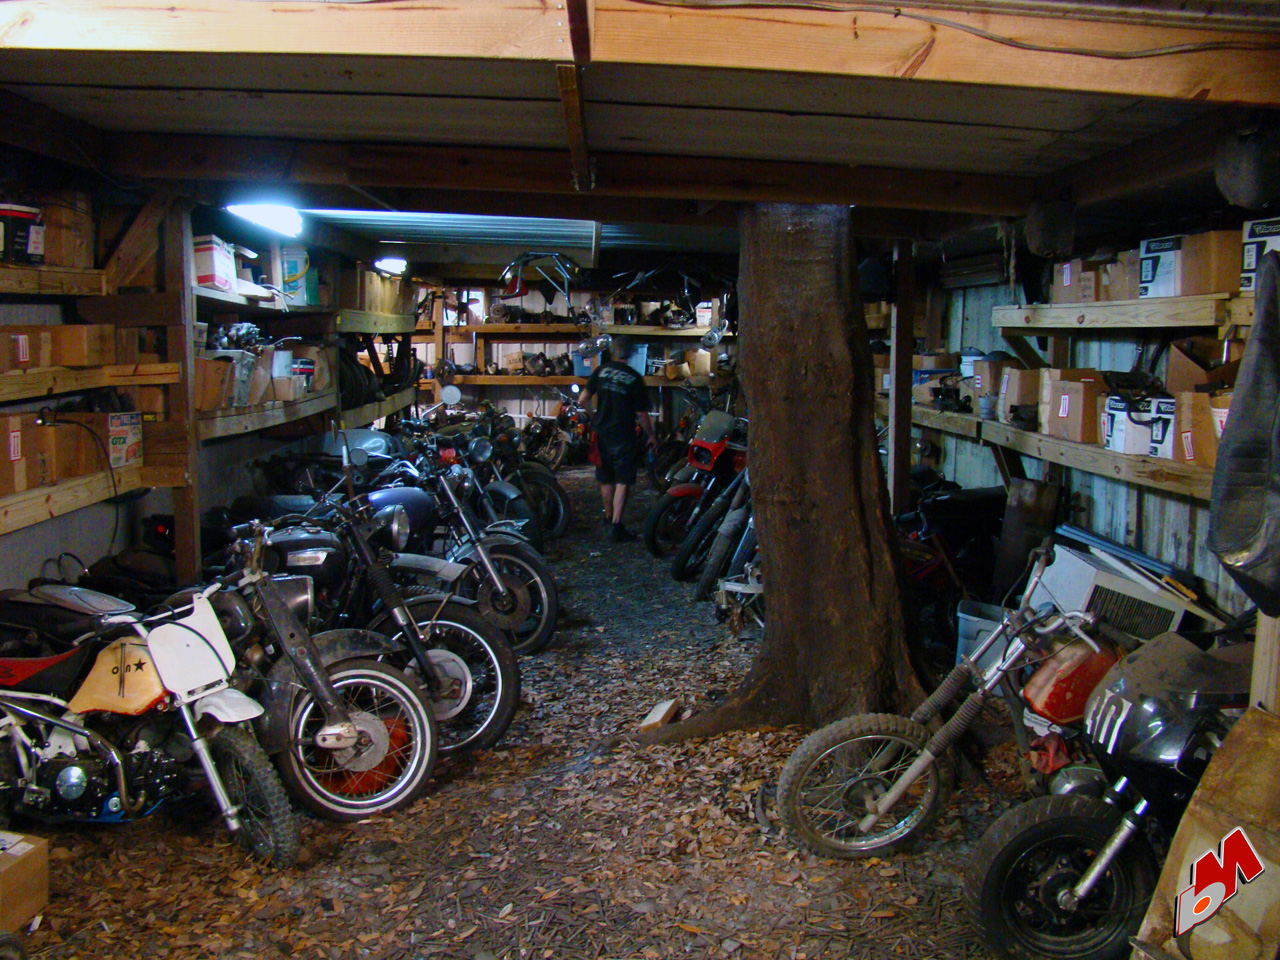 stan keyes from cyco cycle at his home garage - bikerMetric